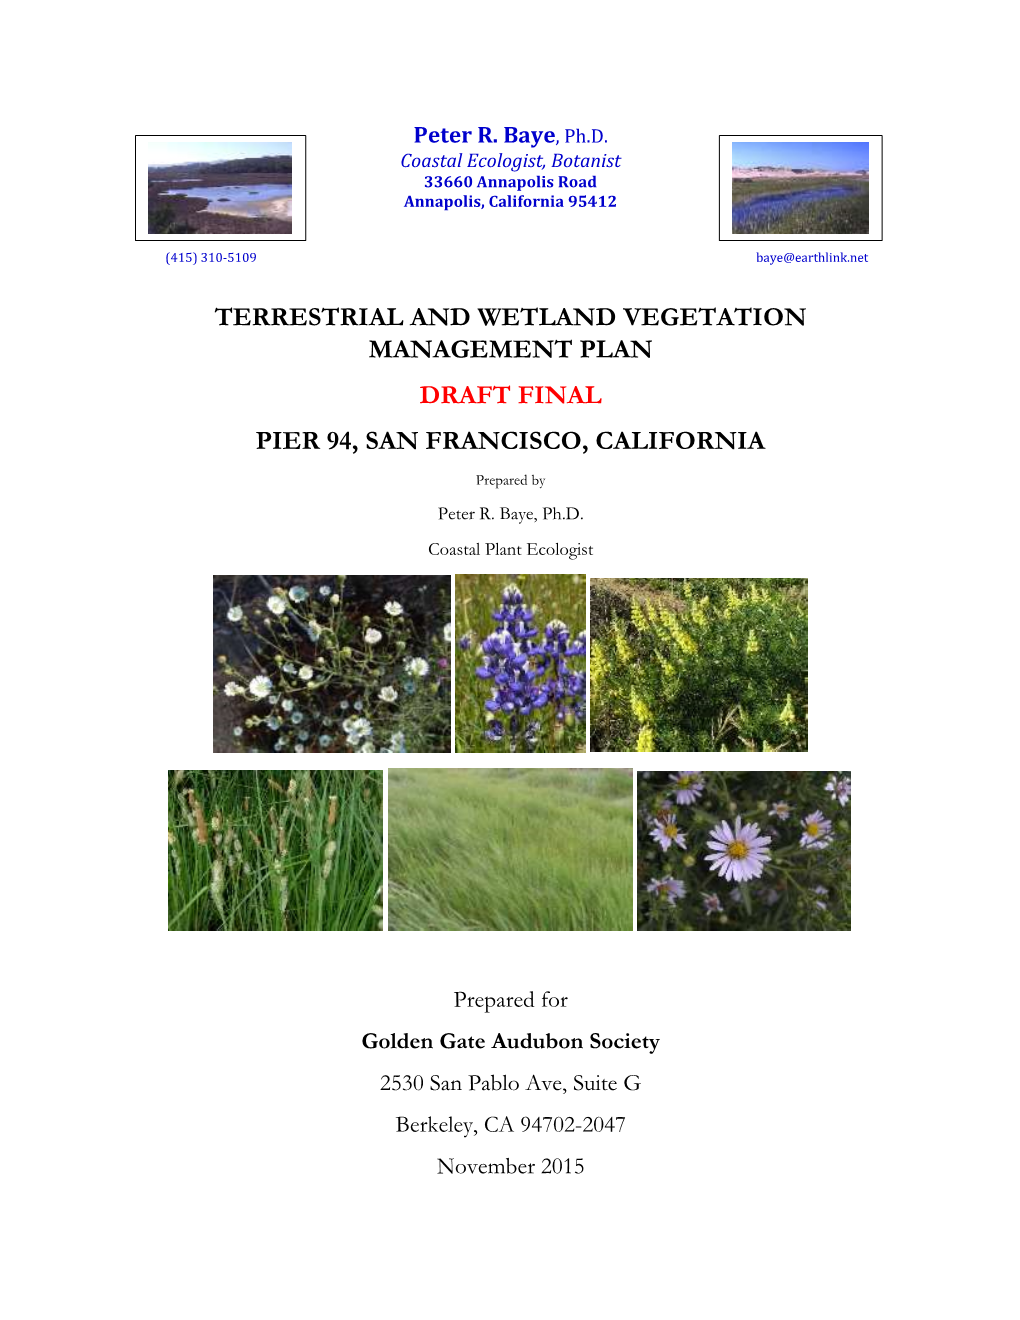 Terrestrial and Wetland Vegetation Management Plan Draft Final Pier 94, San Francisco, California